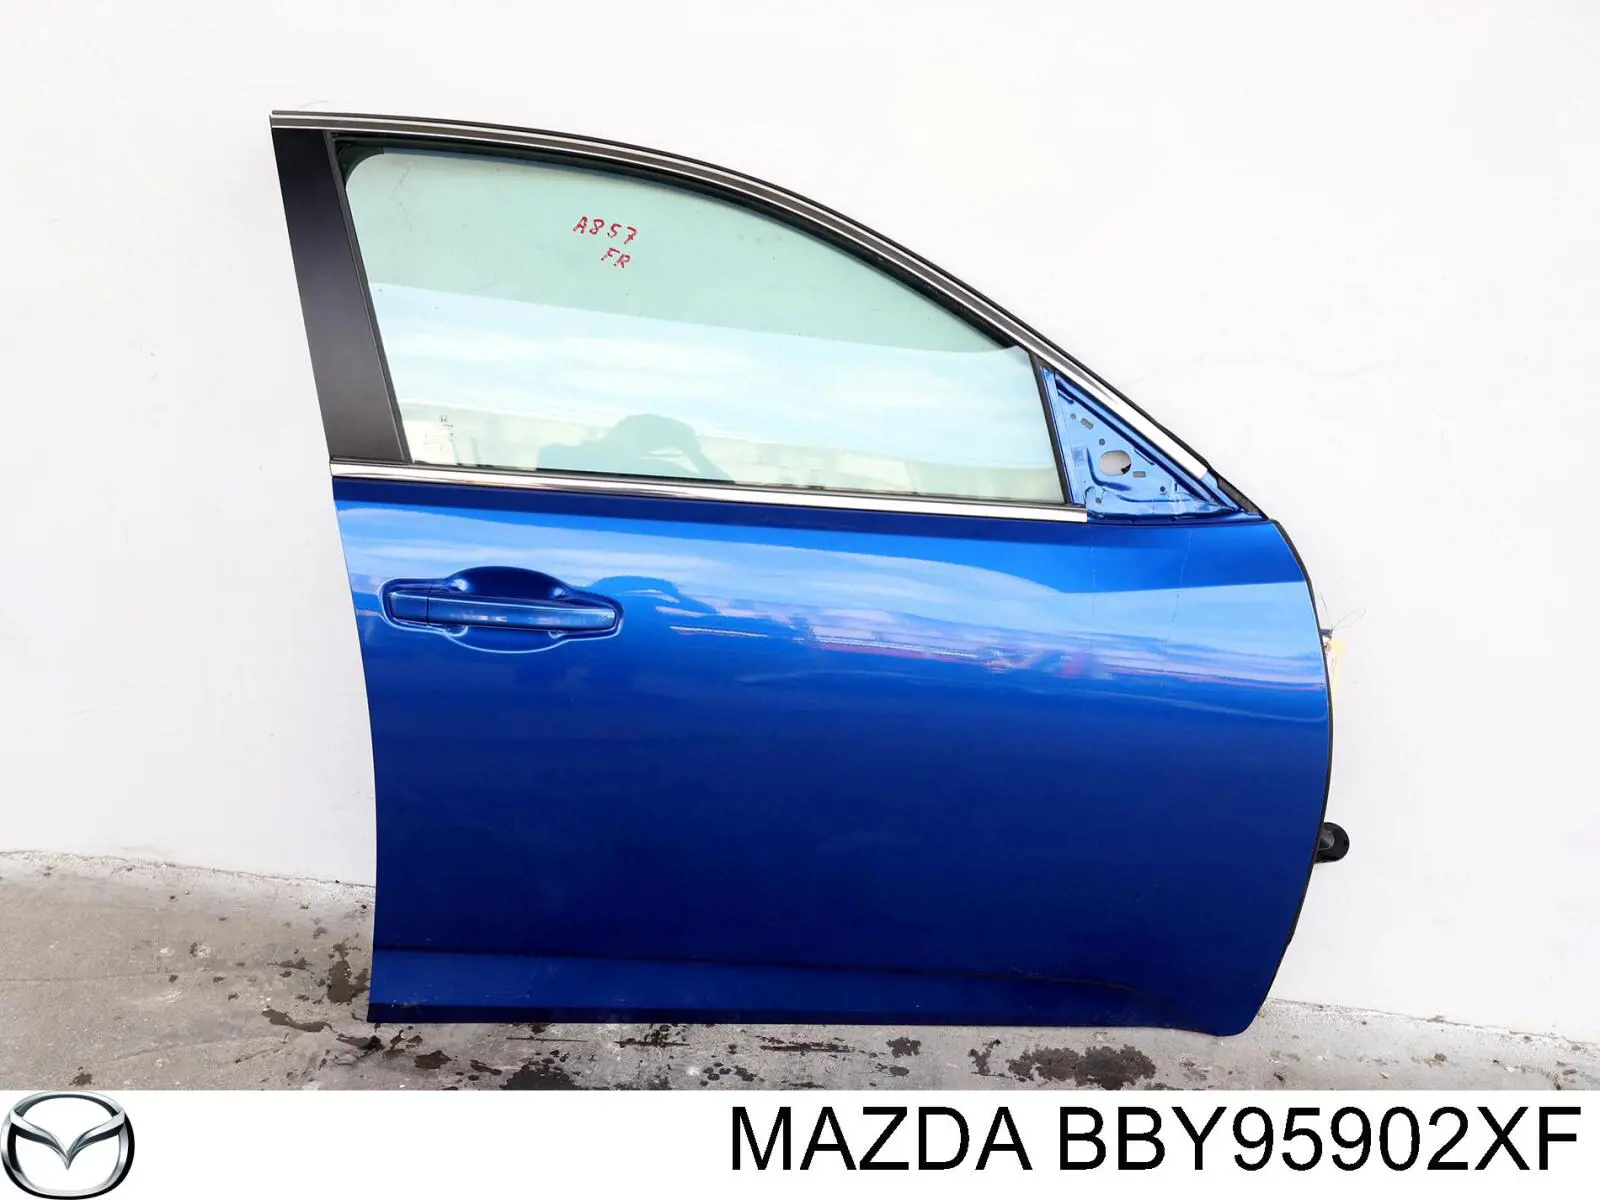 BBY95902XE Mazda дверь передняя левая